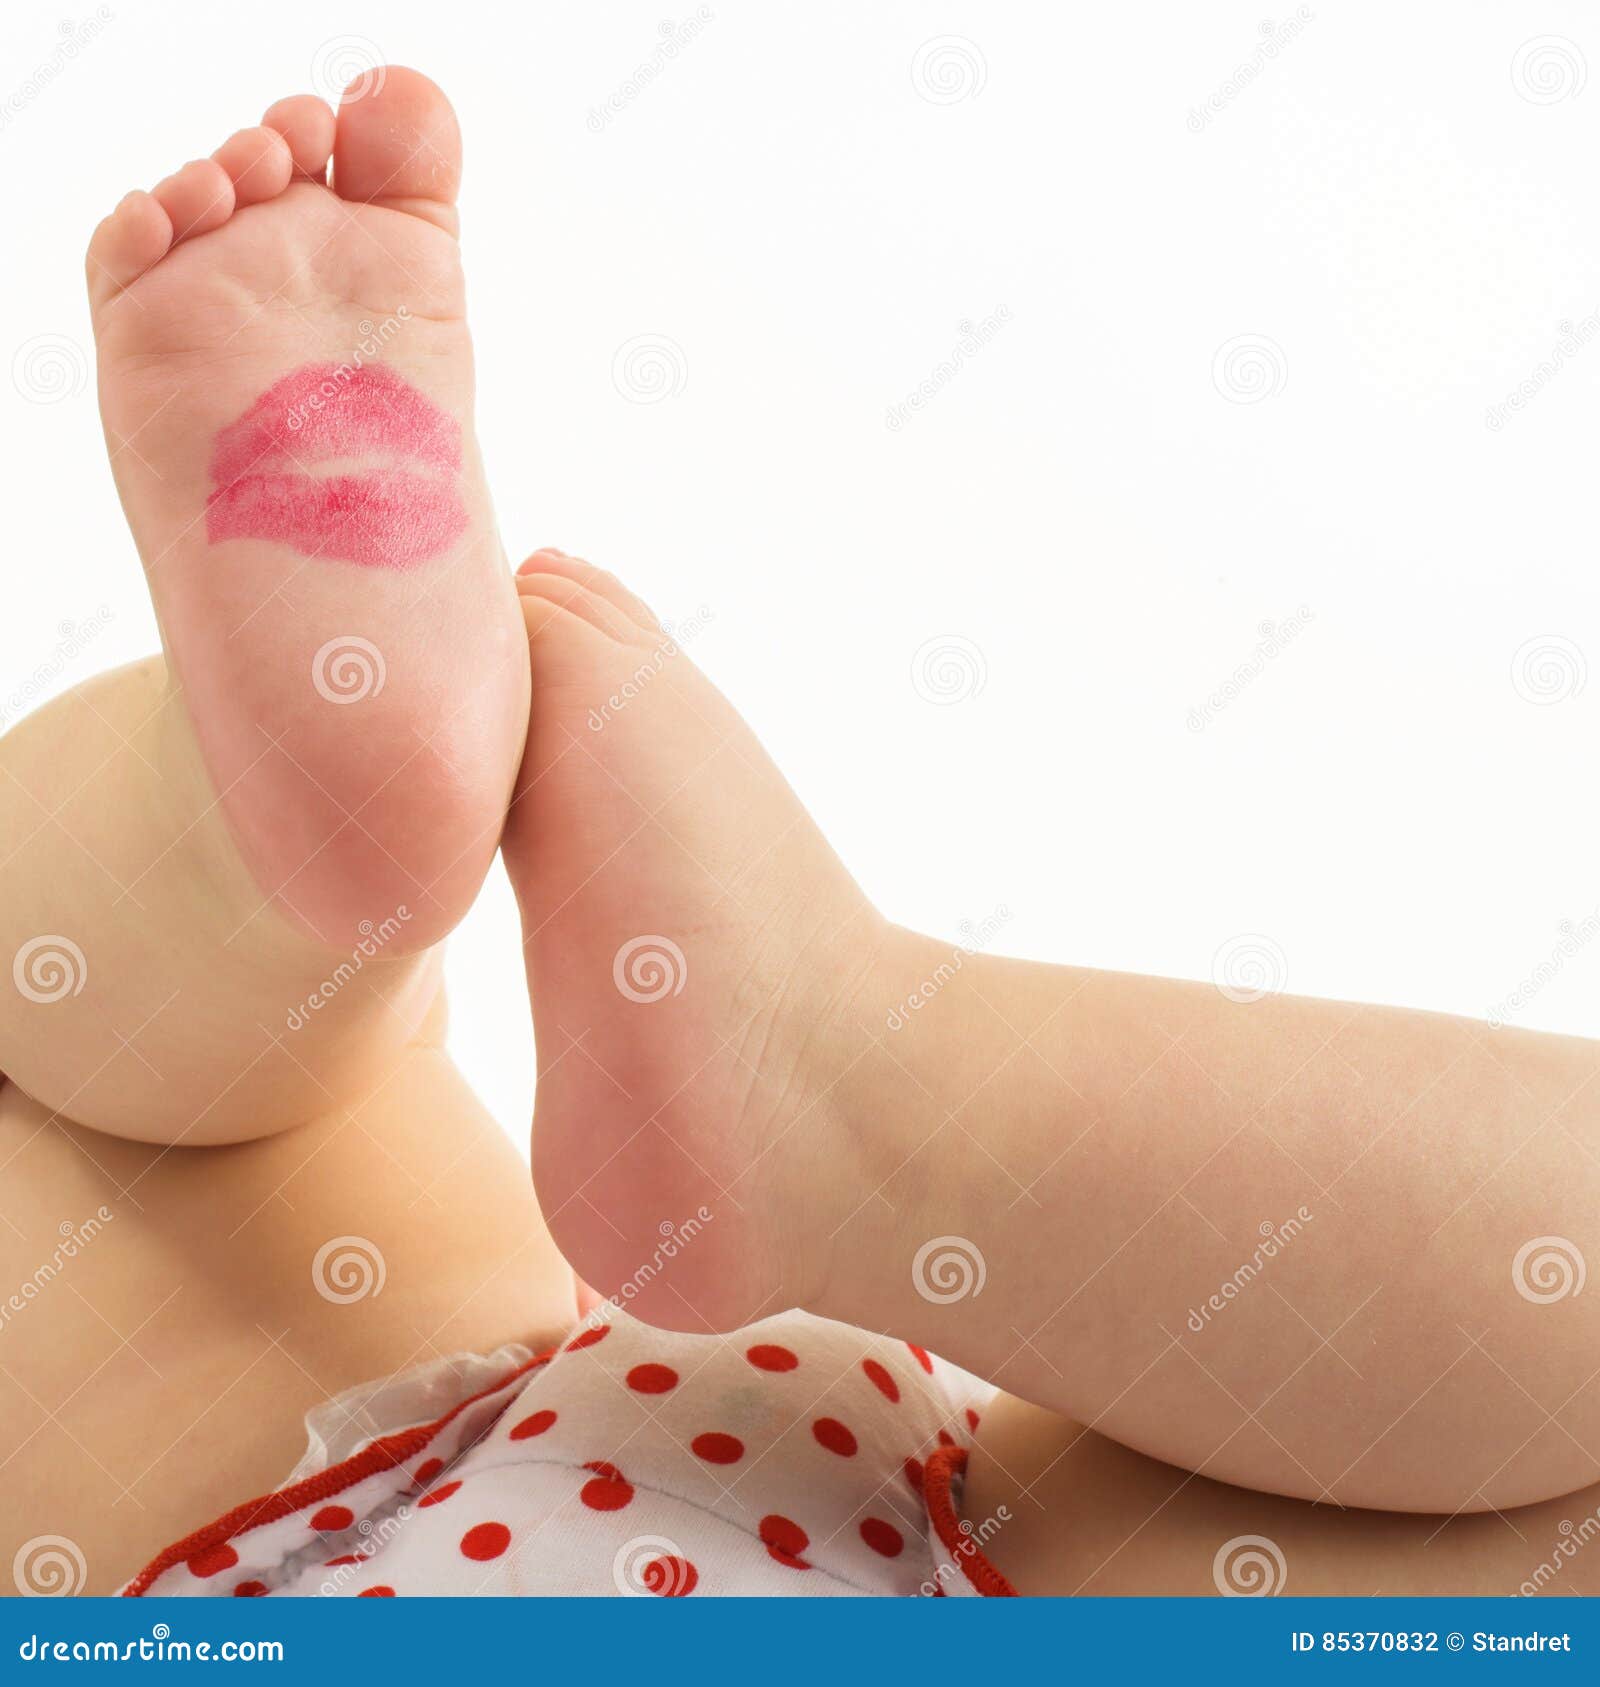 Feet Pics Stock Photos - 1,741 Images